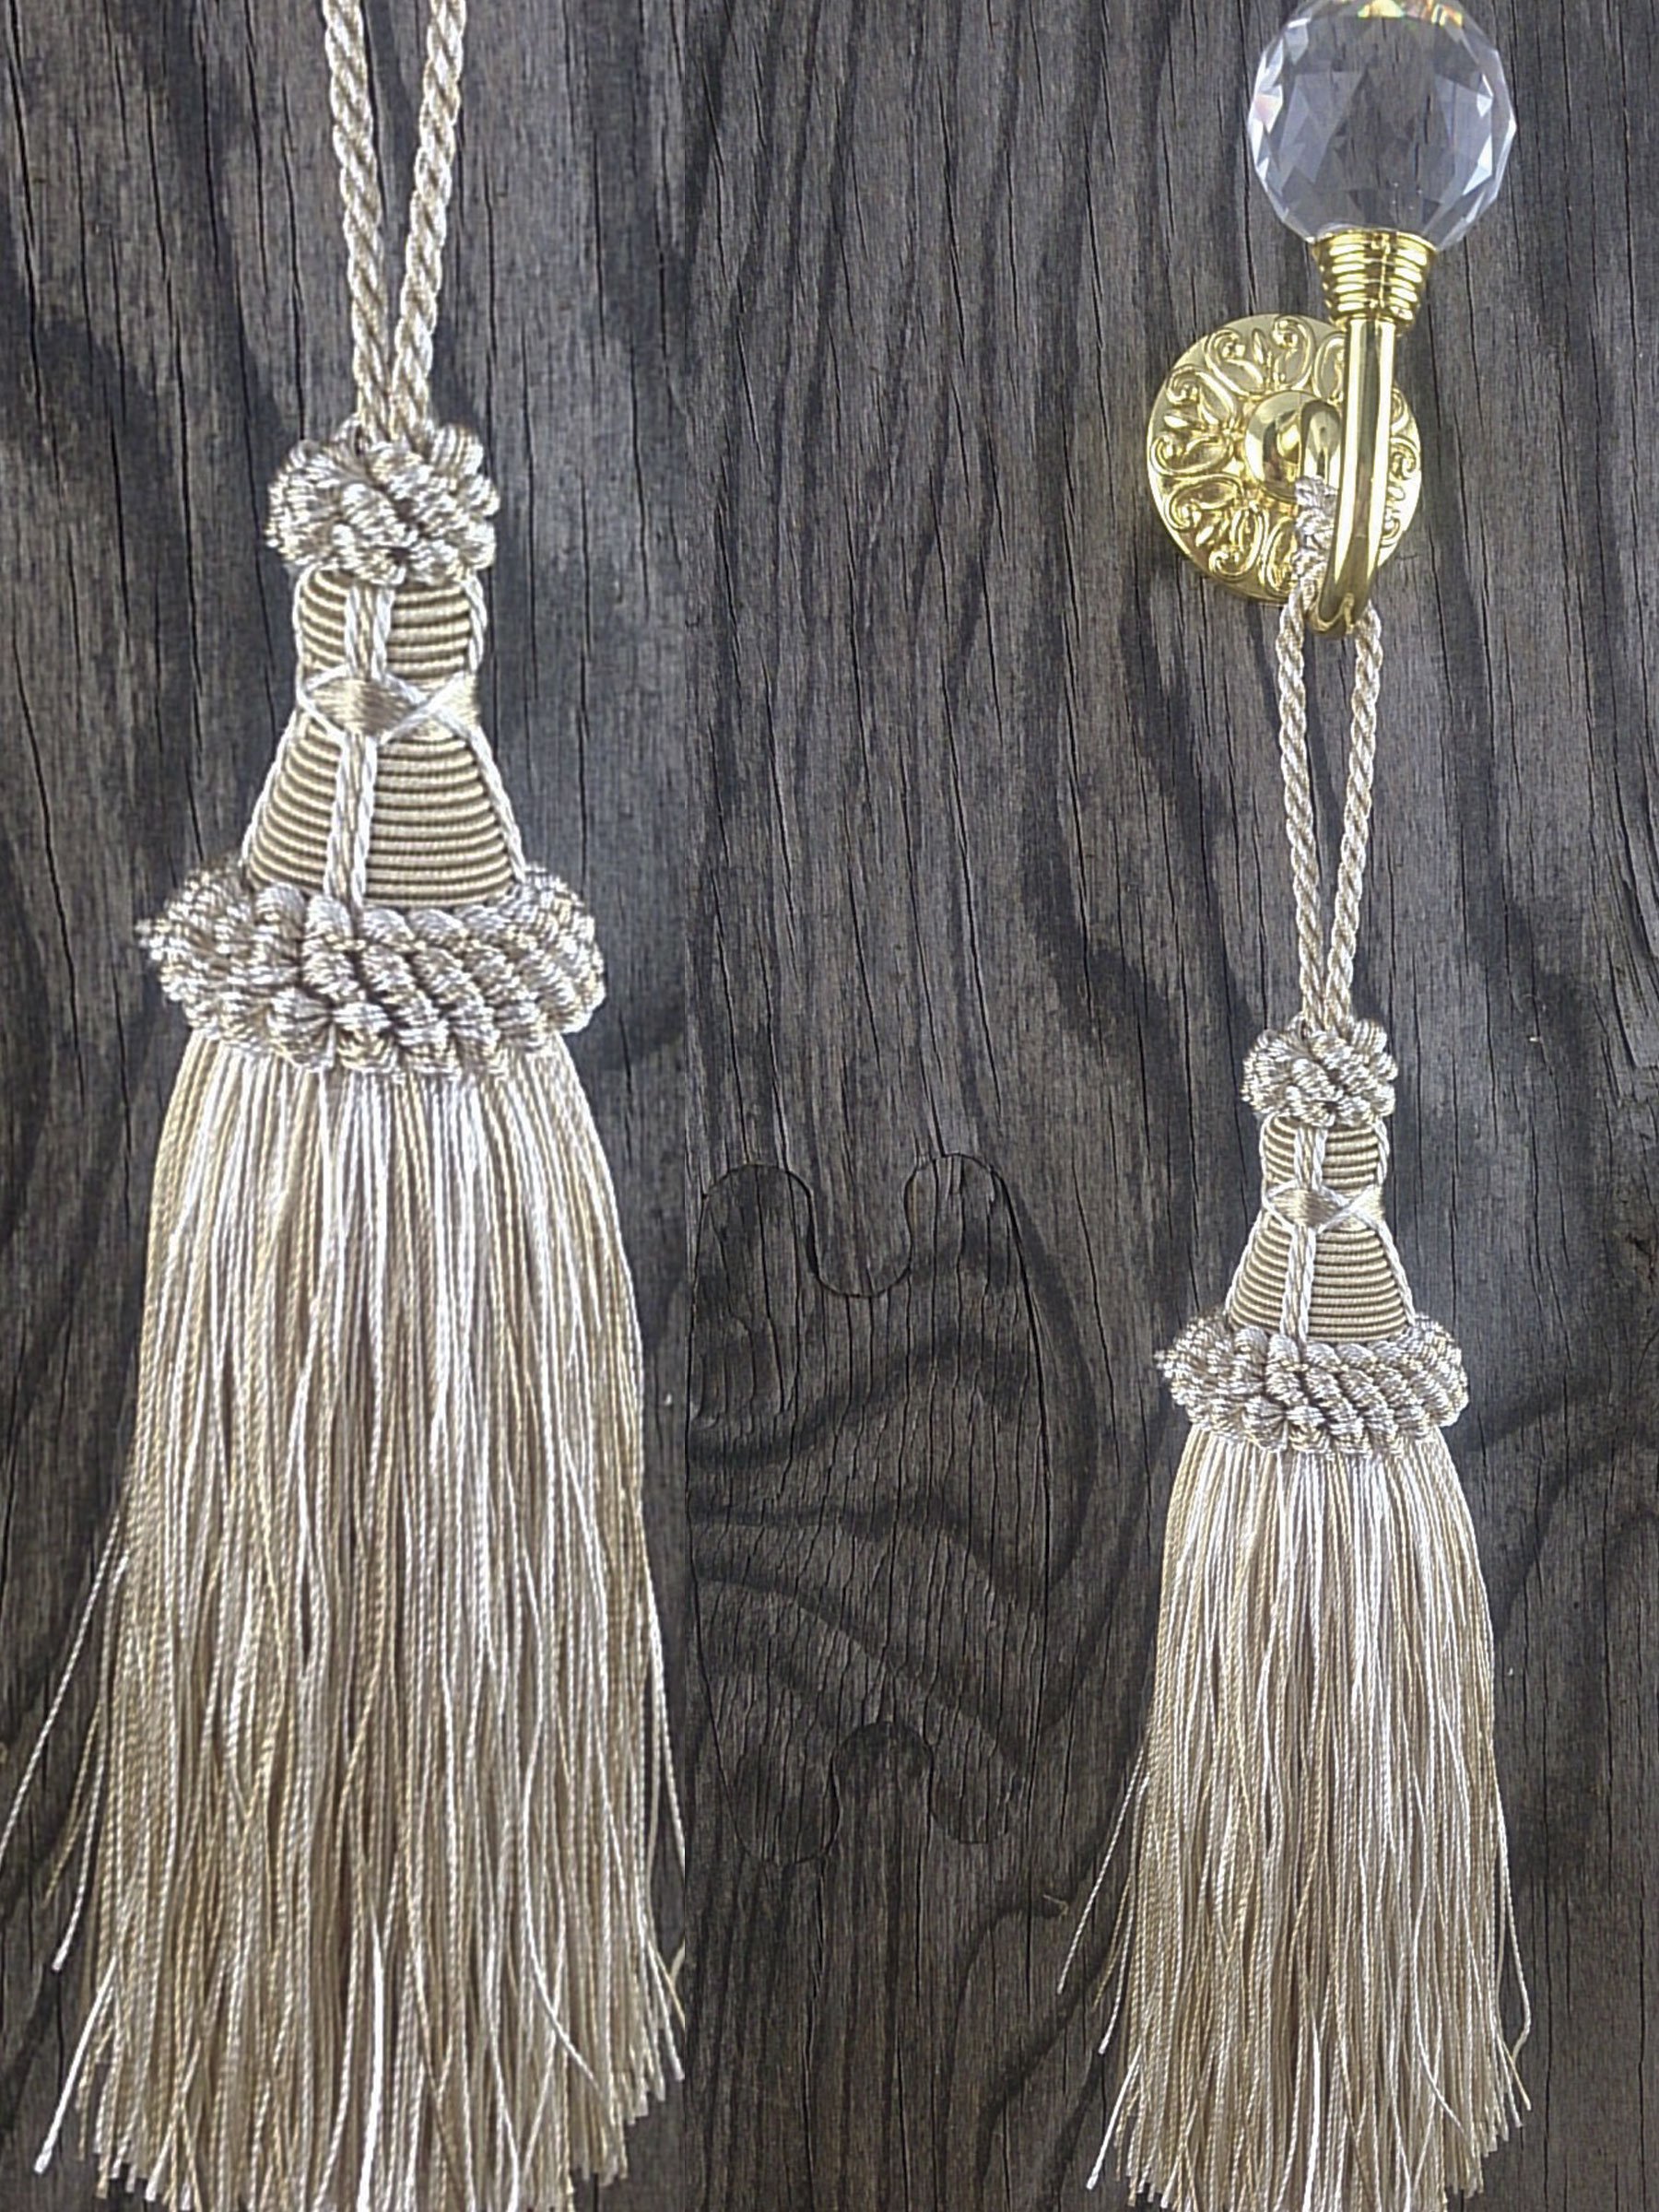 Key Tassel with woven head - Gold Cream 16cm